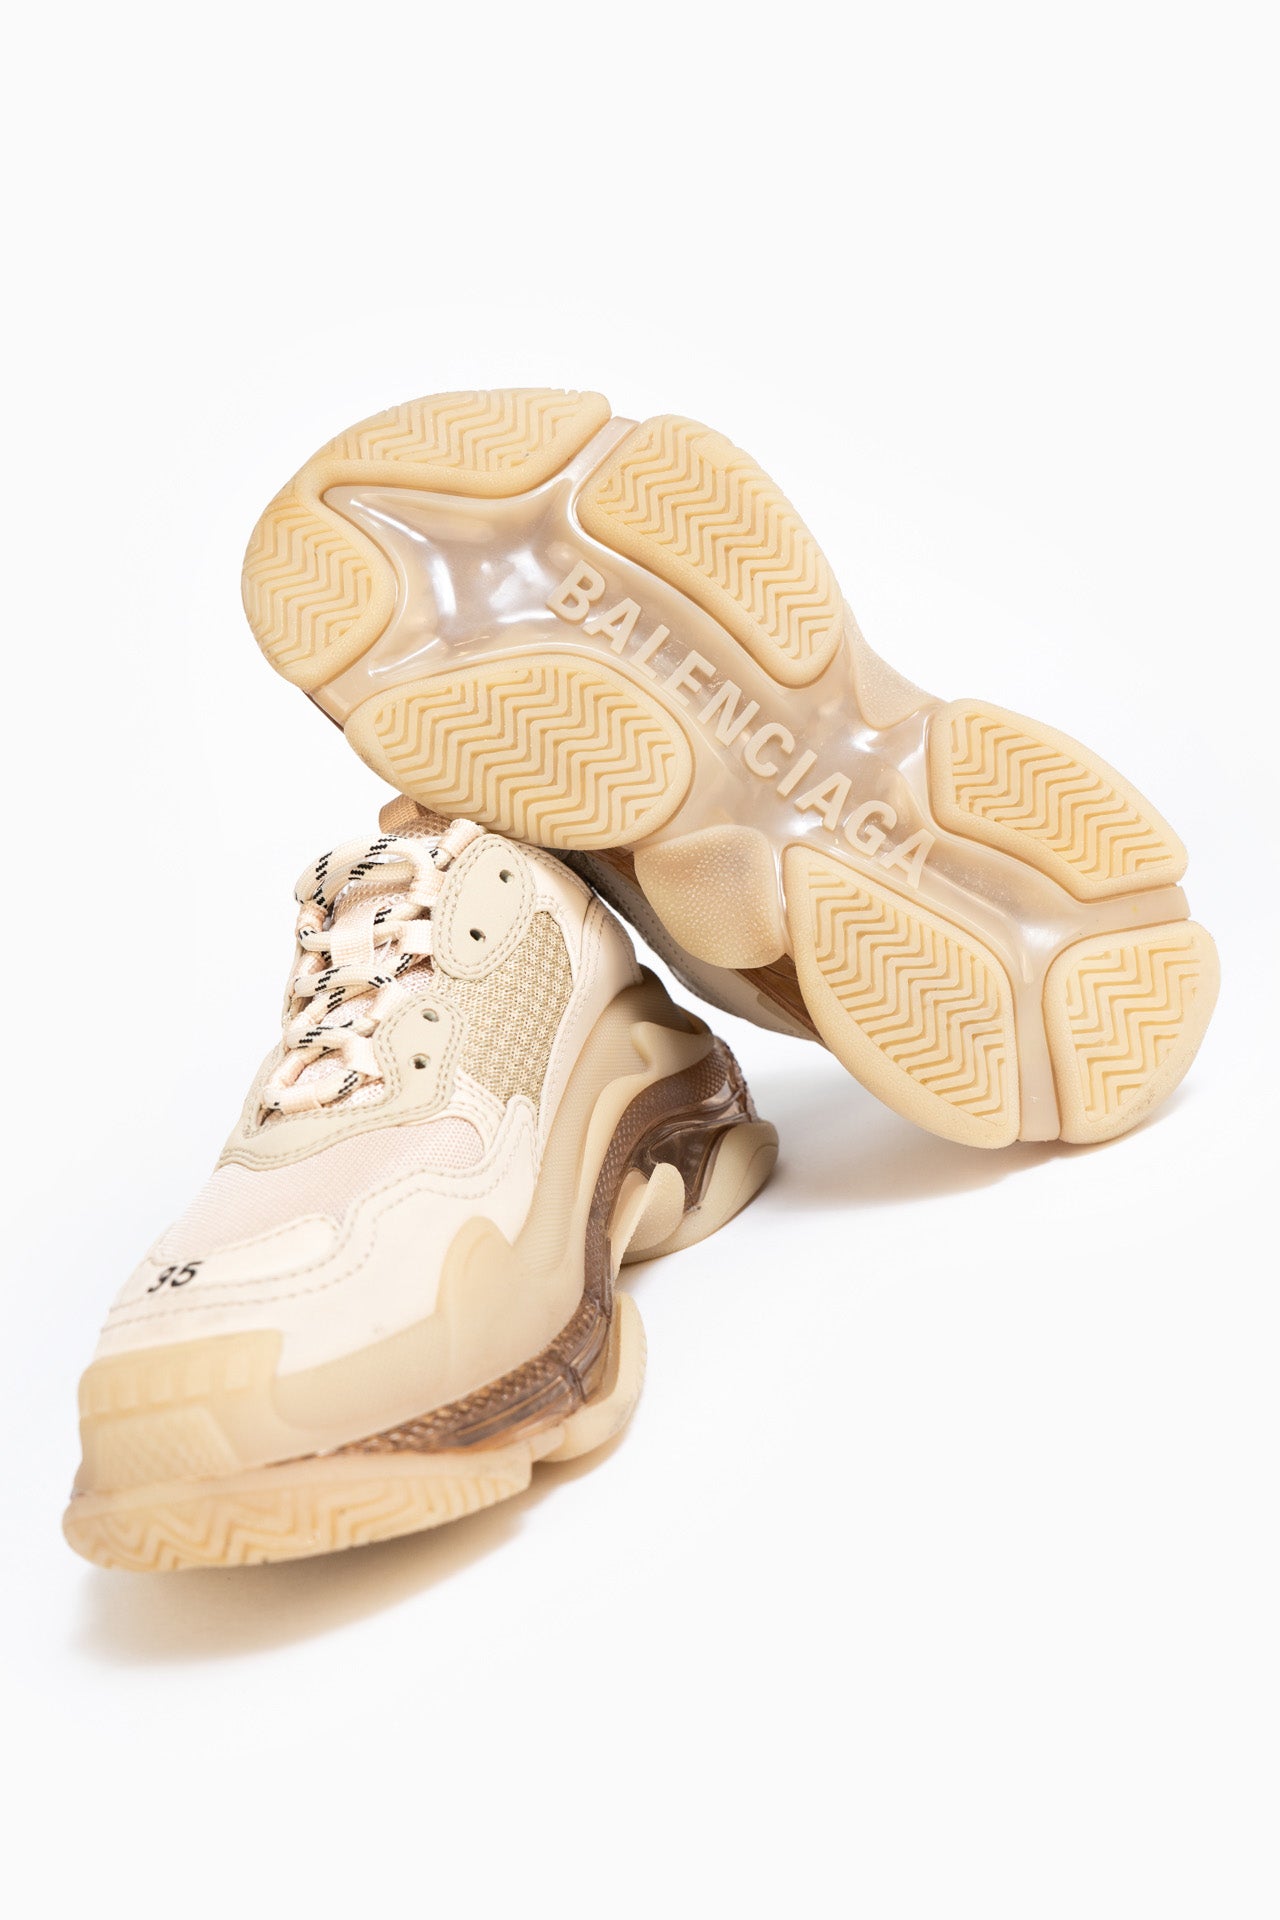 Balenciaga Sneakers Triple S - Size 35